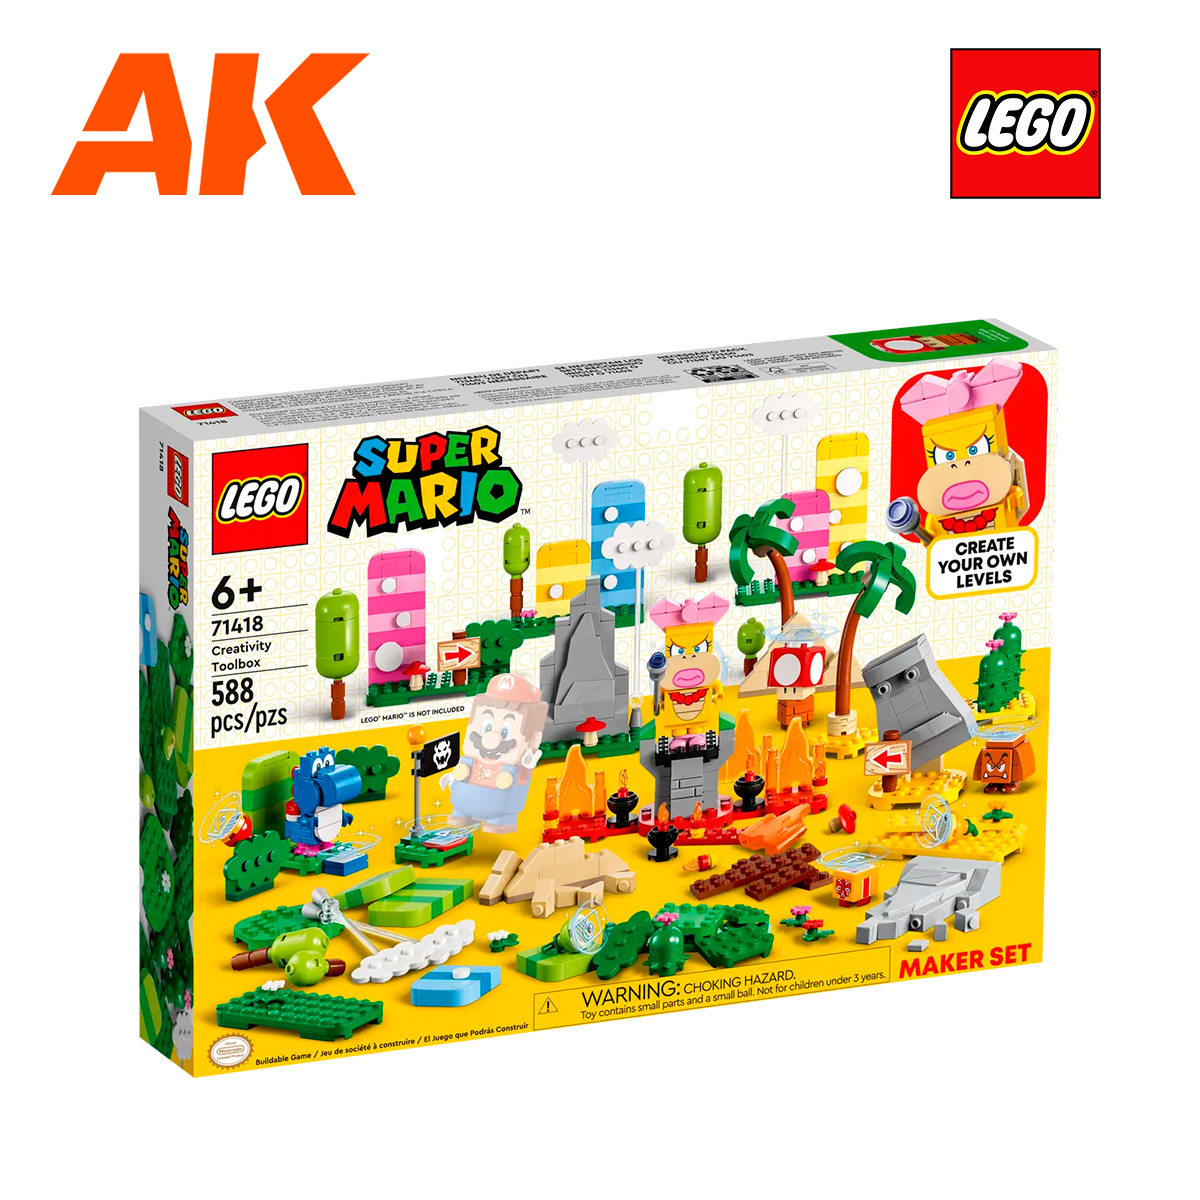 https://ak-interactive.com/wp-content/uploads/2023/05/LEGO71418.jpg